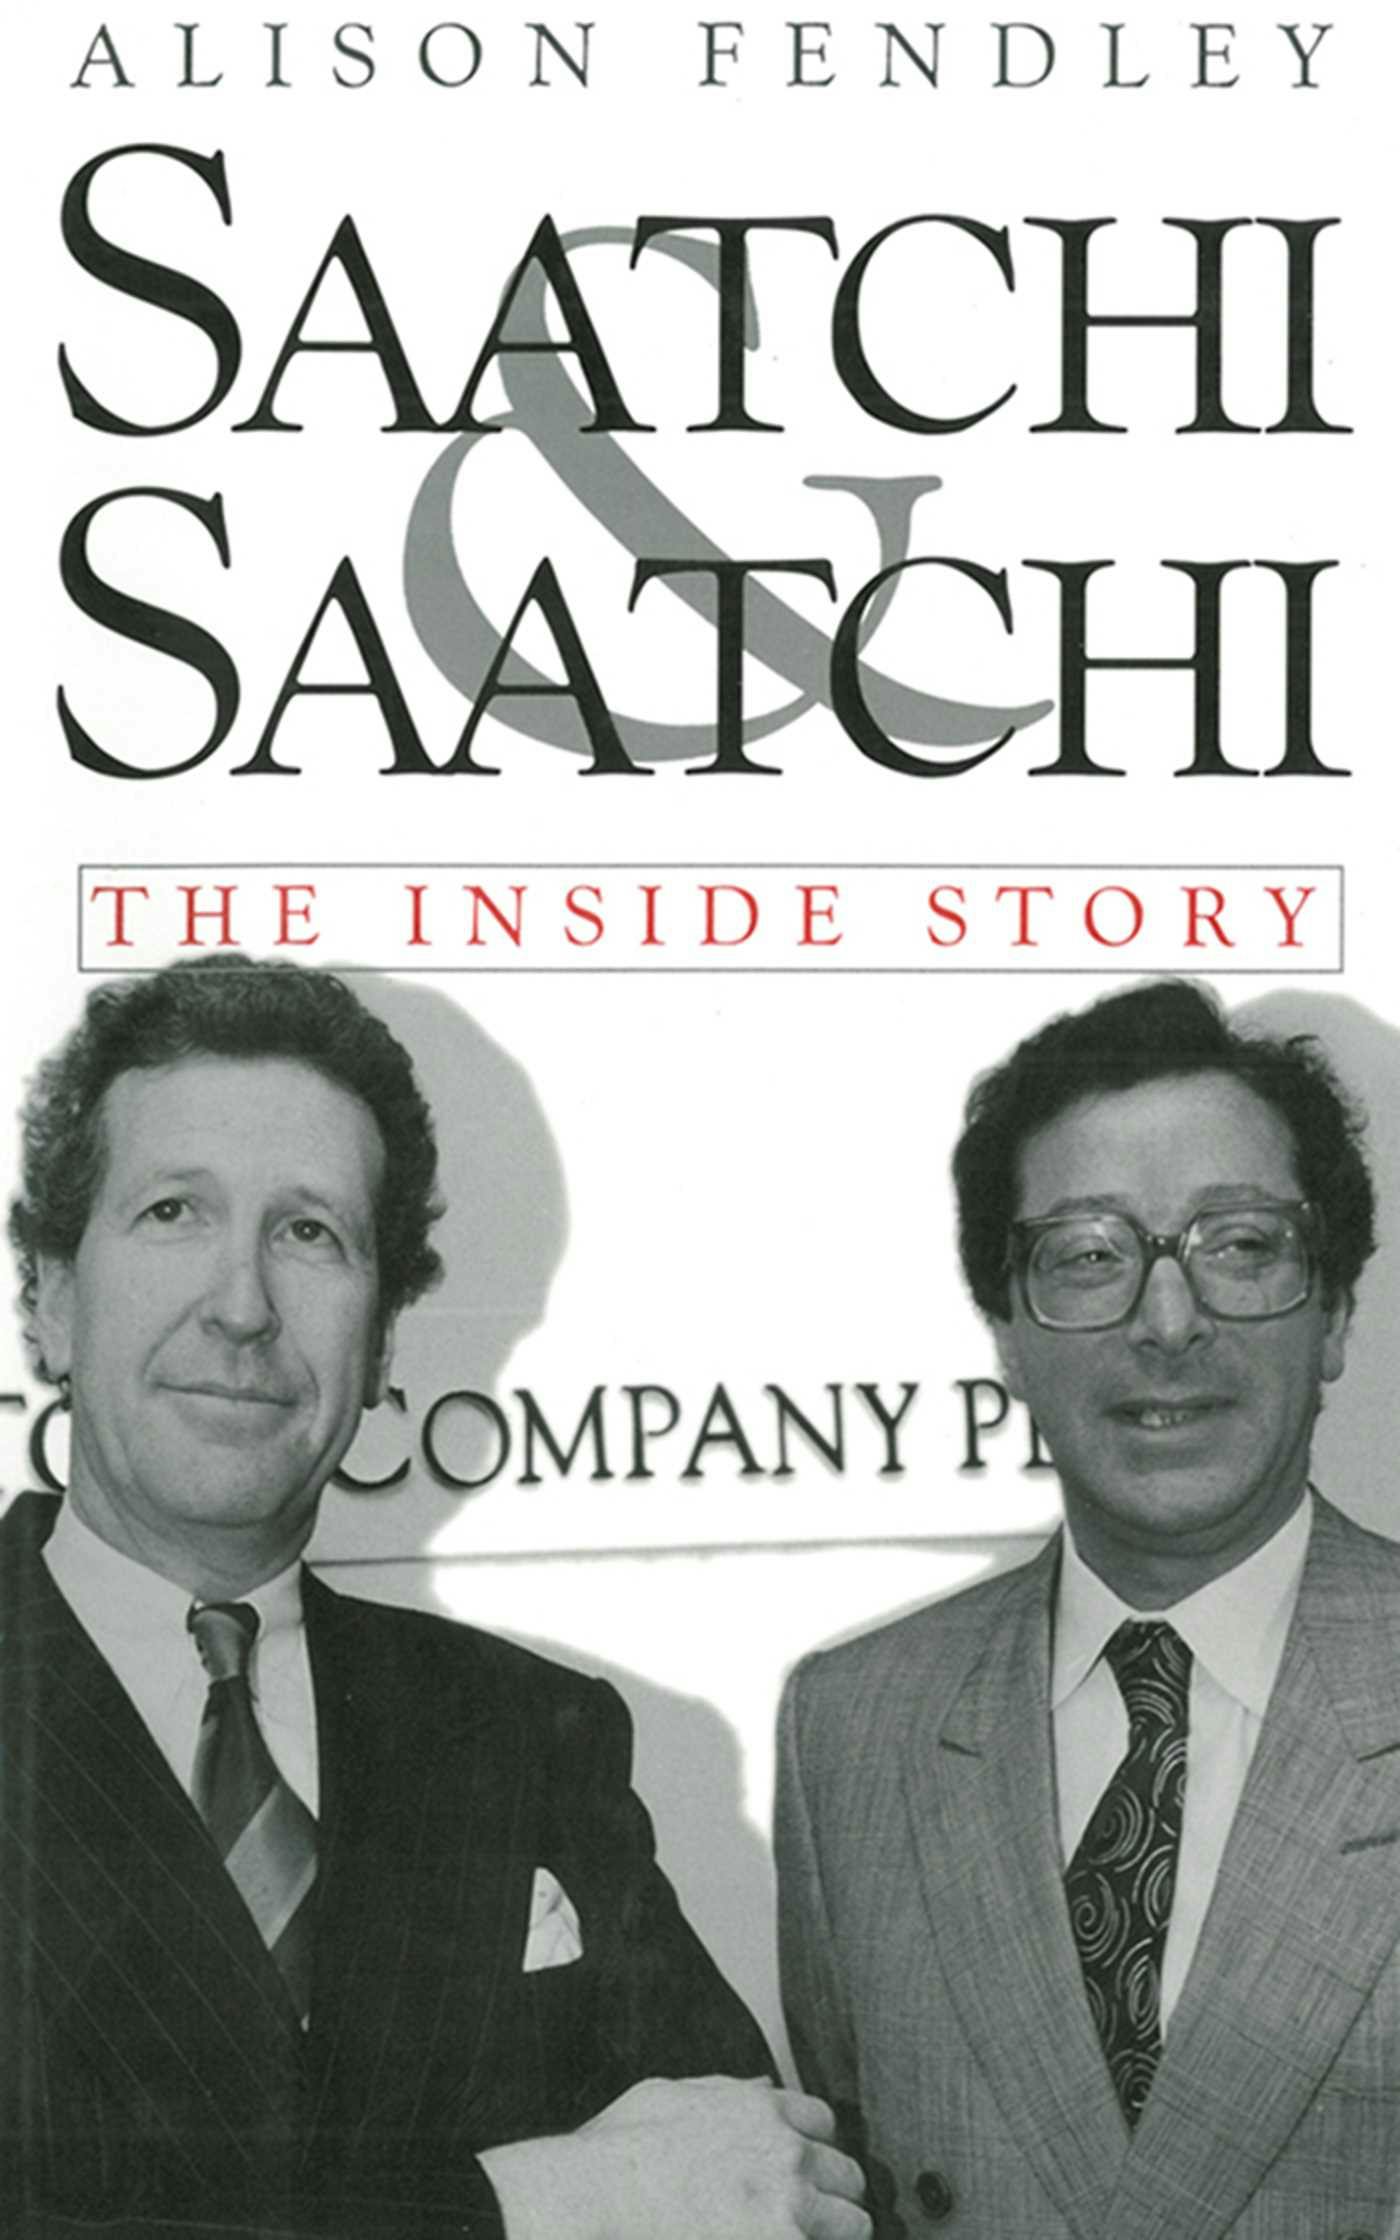 Saatchi & Saatchi: The Inside Story - Alison Fendley